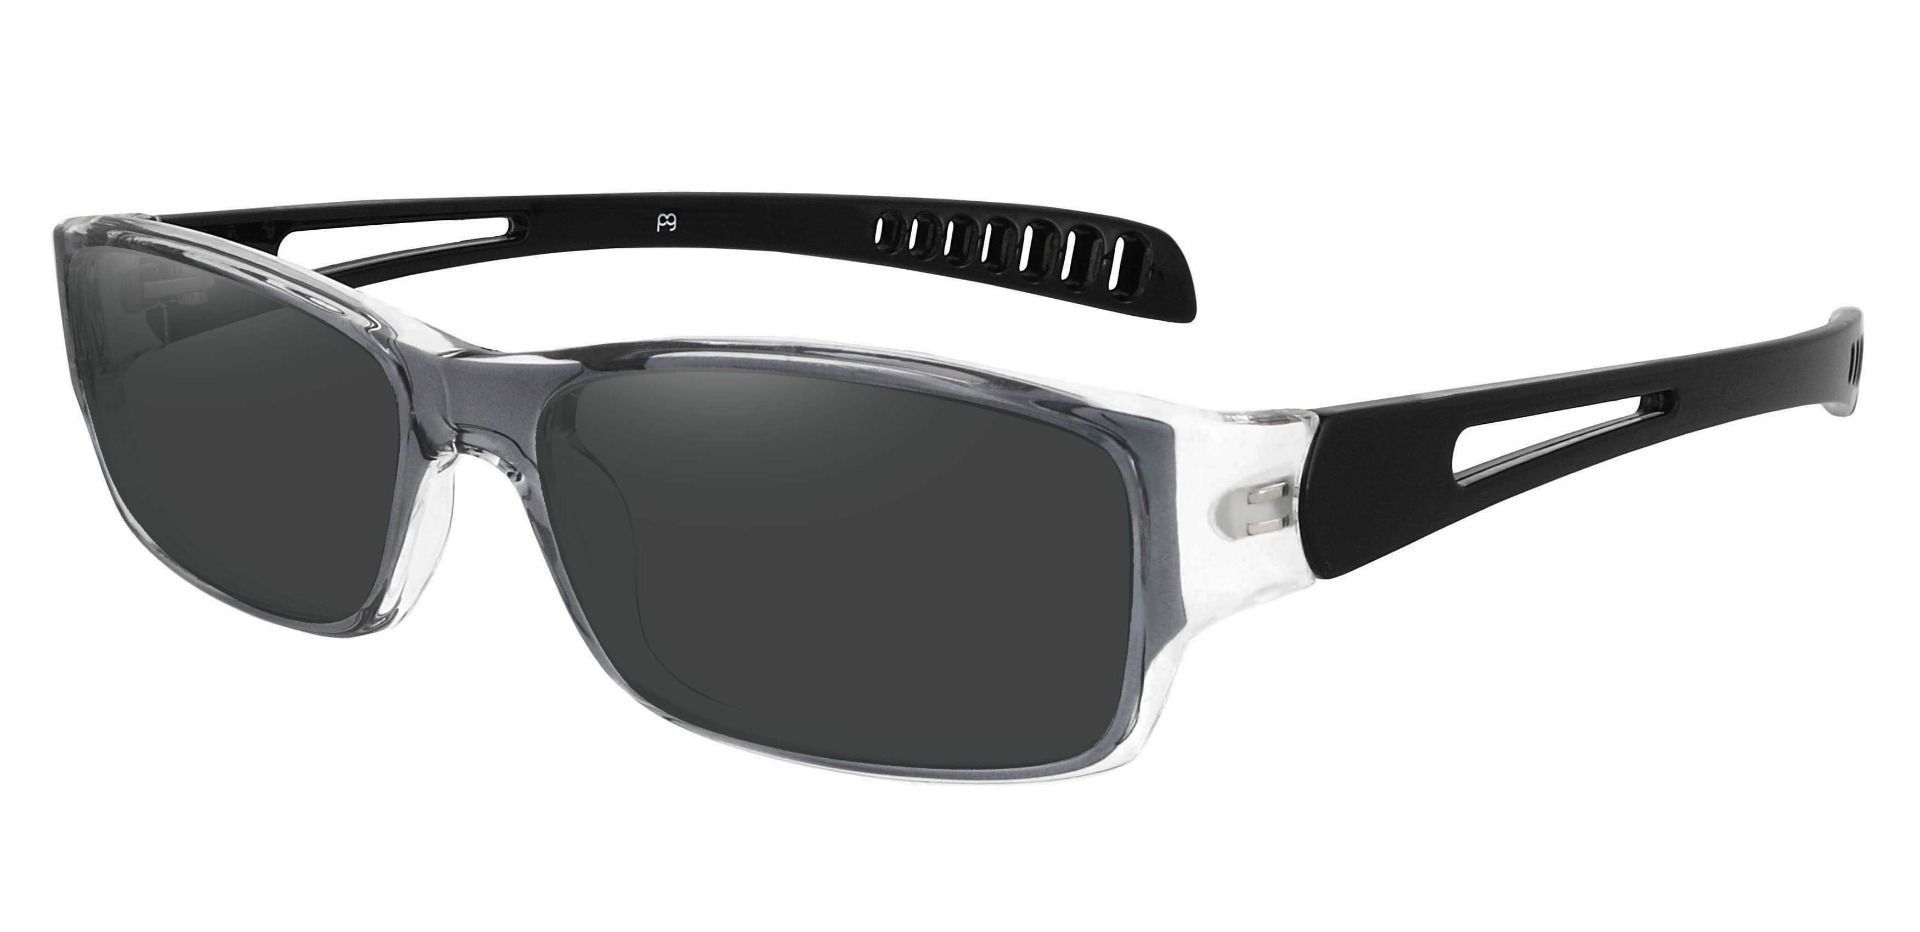 Mercury Rectangle Prescription Sunglasses - Gray Frame With Gray Lenses